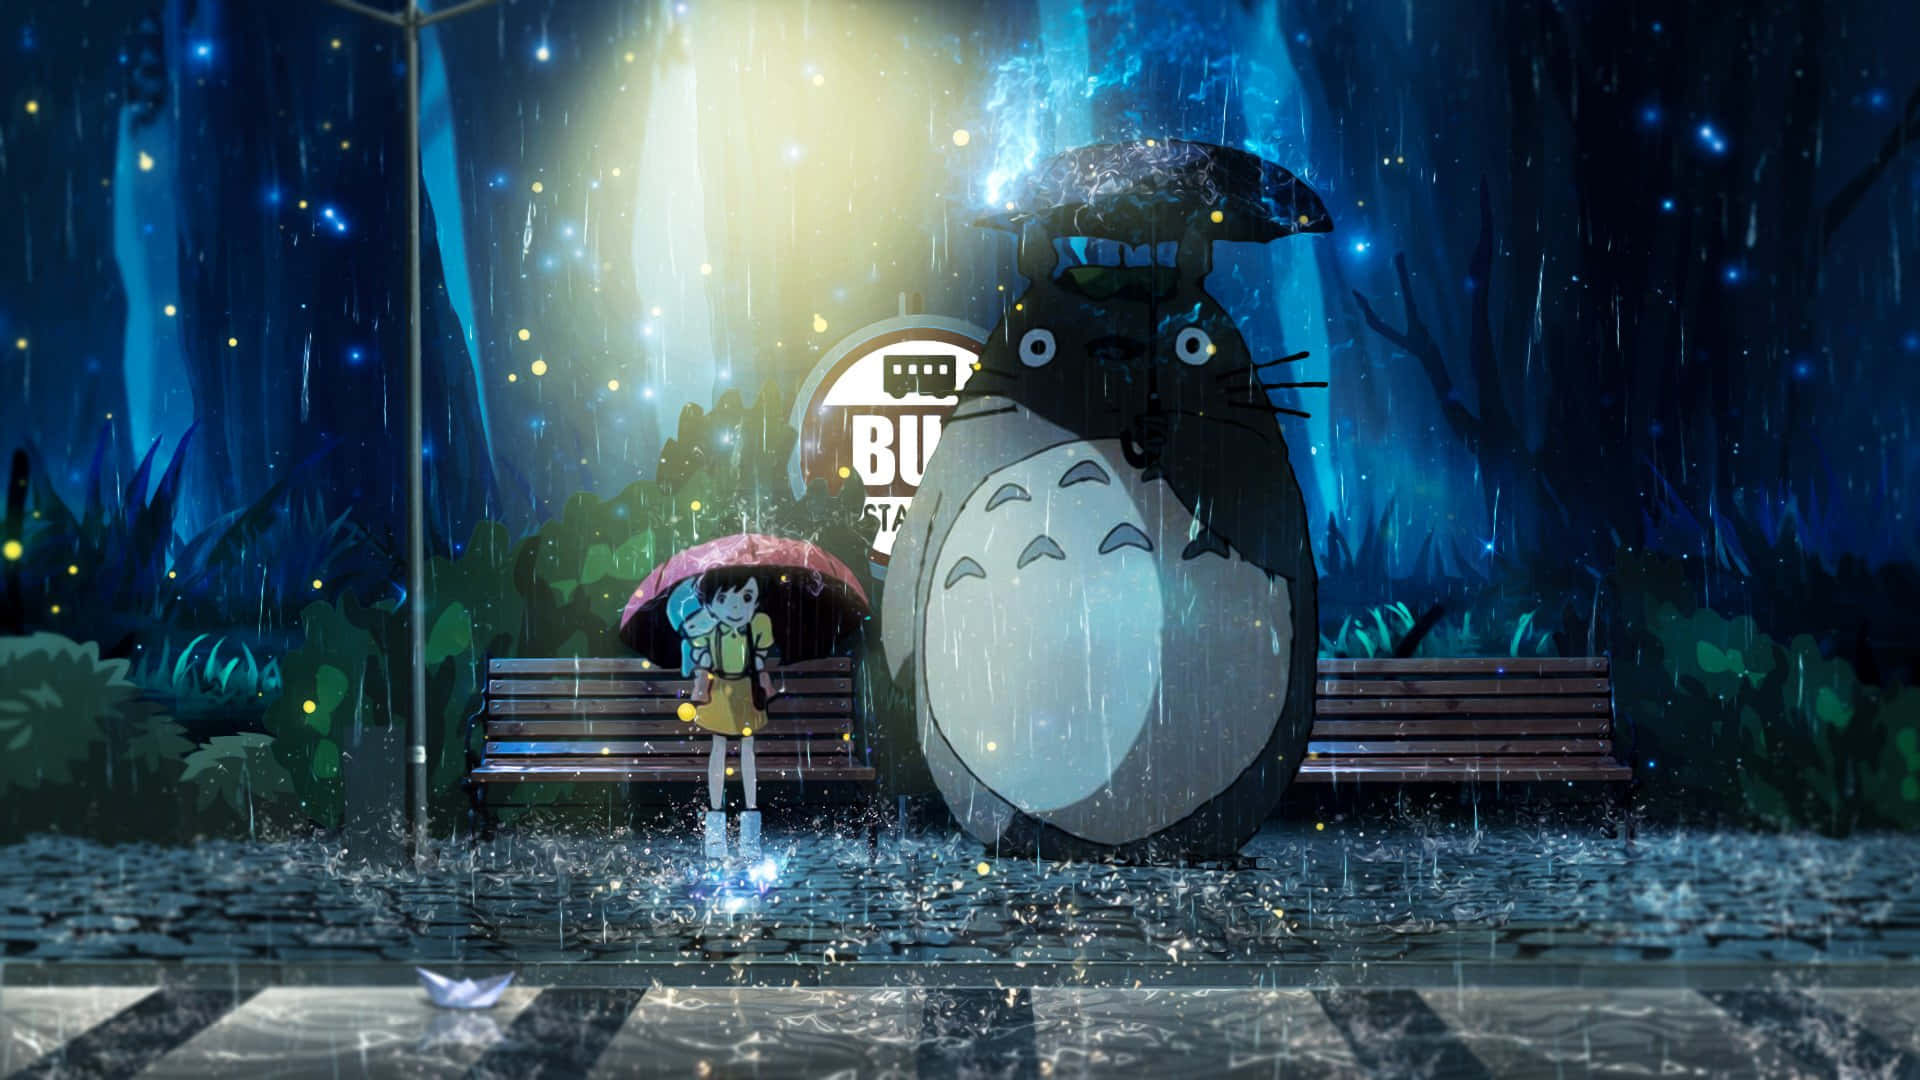 "Let's Follow The Magic of Totoro"